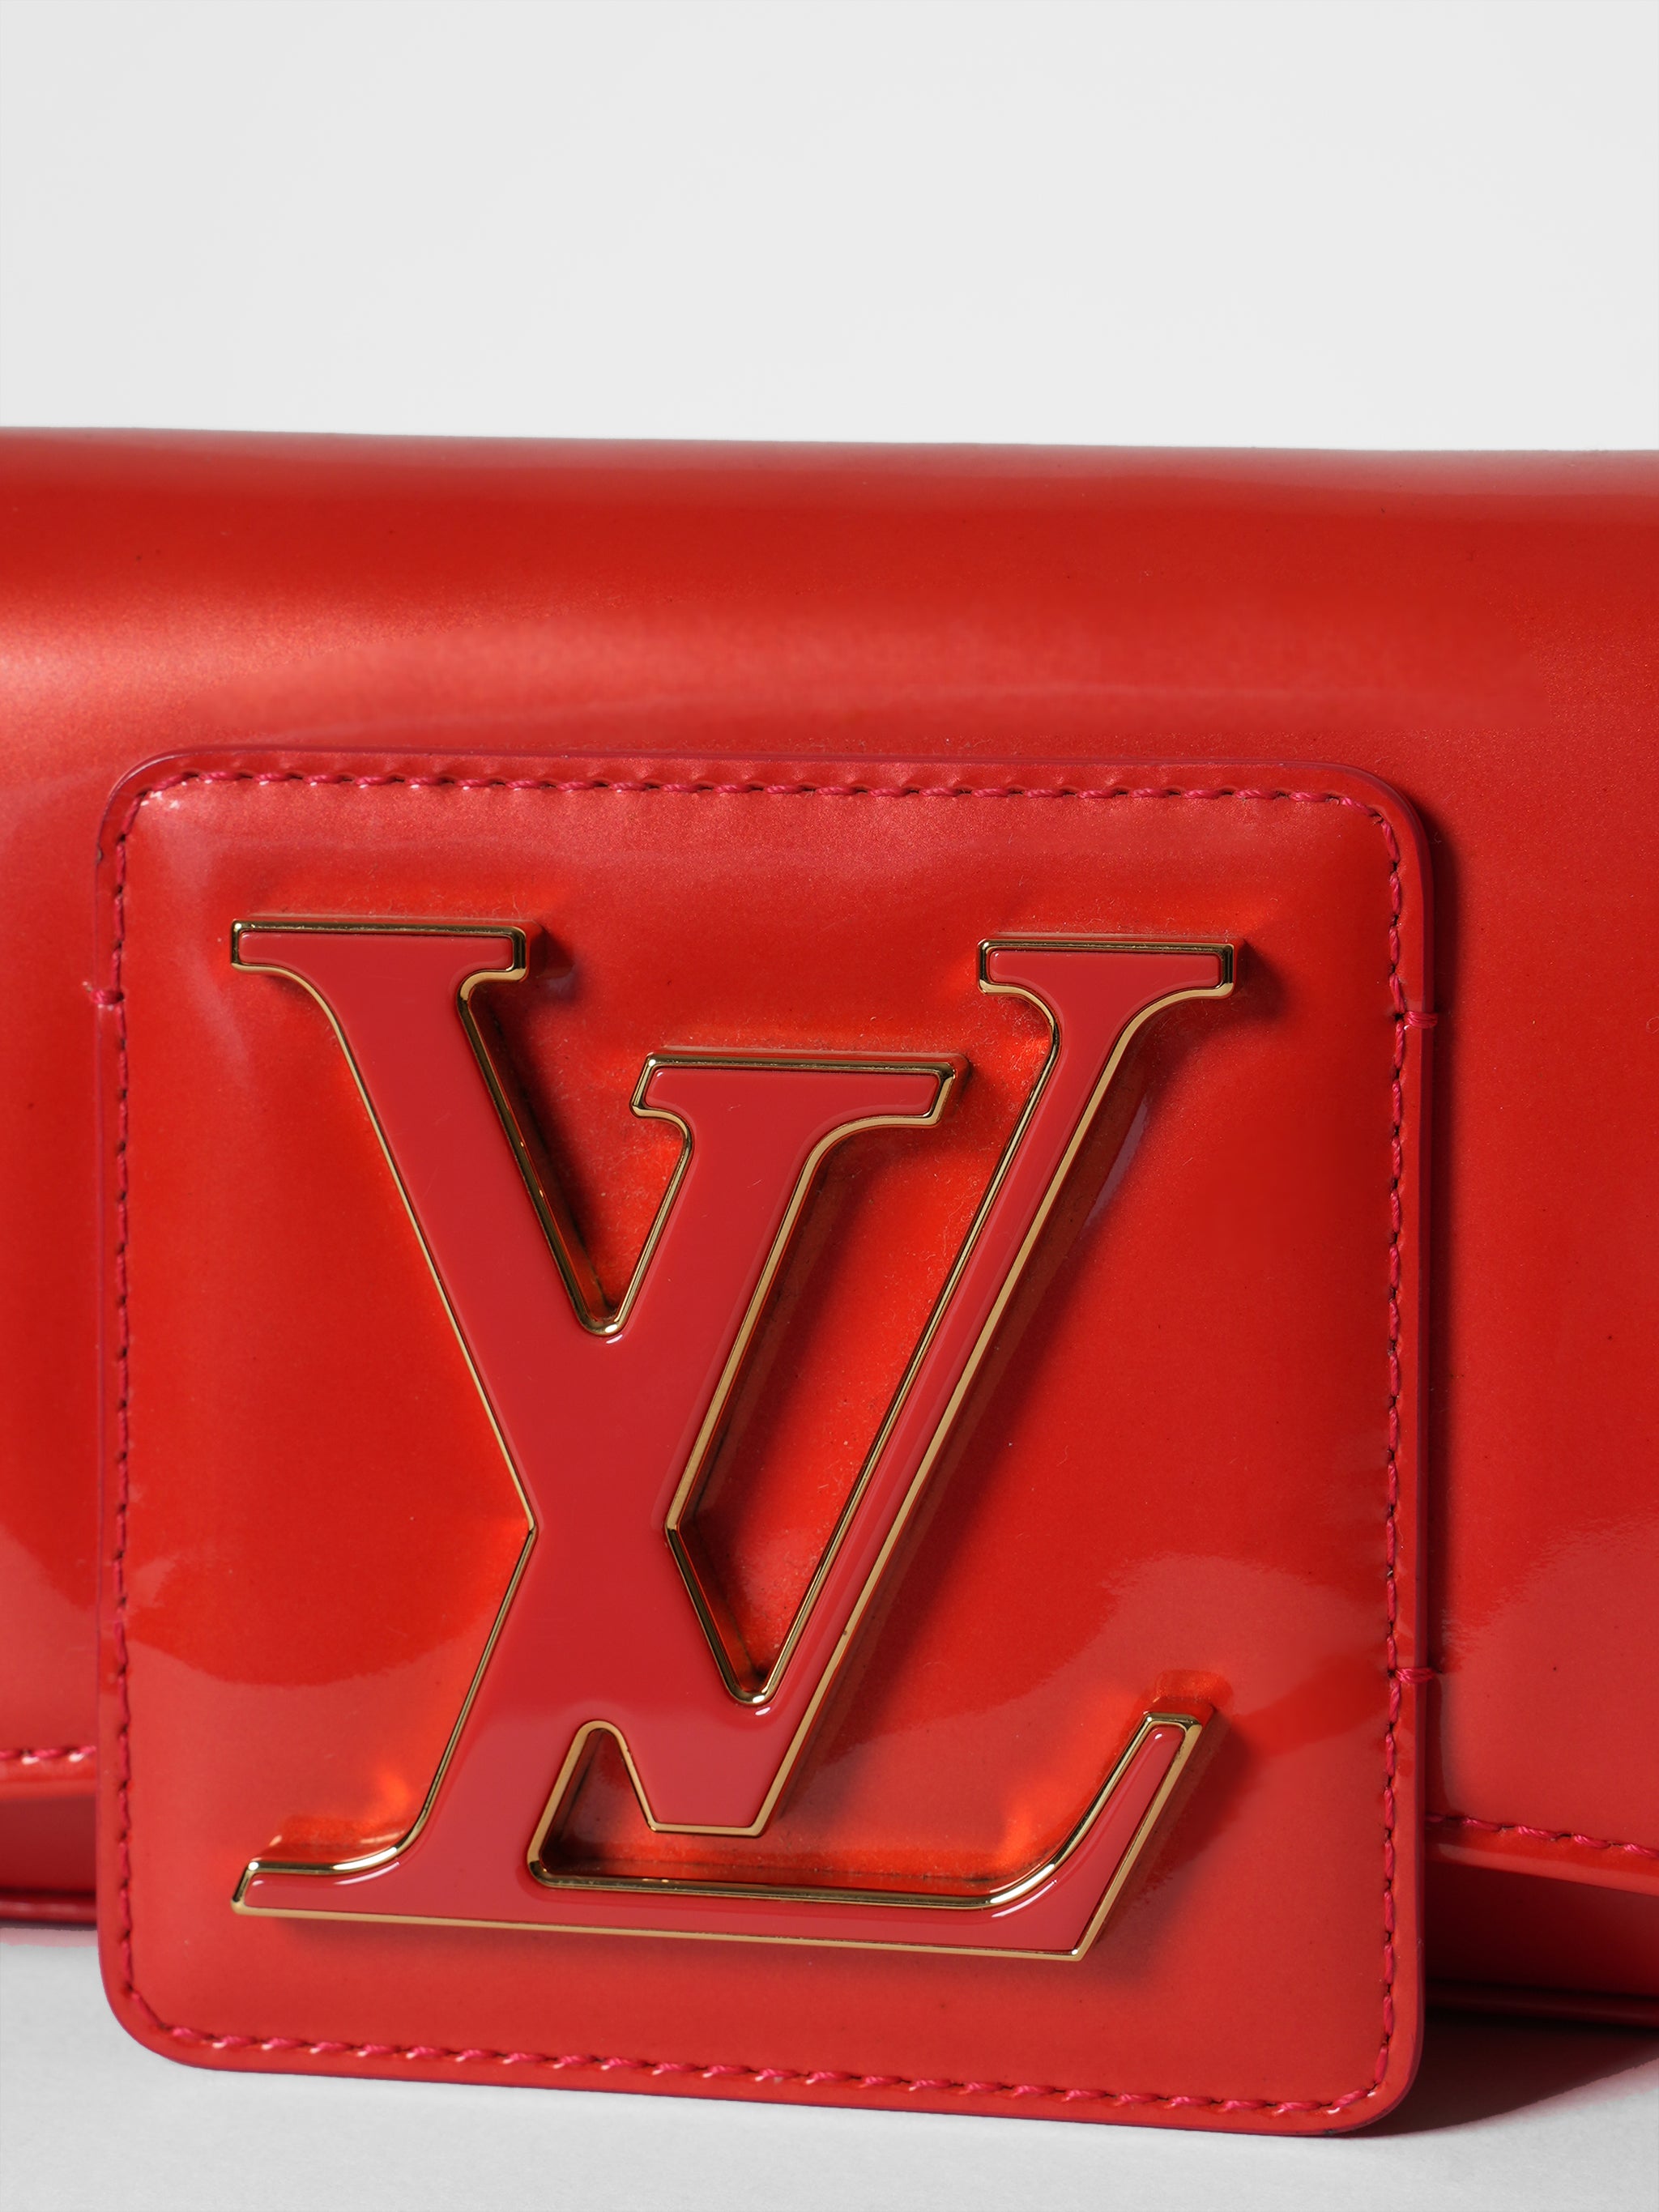 LOUIS VUITTON Amarante Vernis Glossy Patent Calf Leather SoBe Clutch